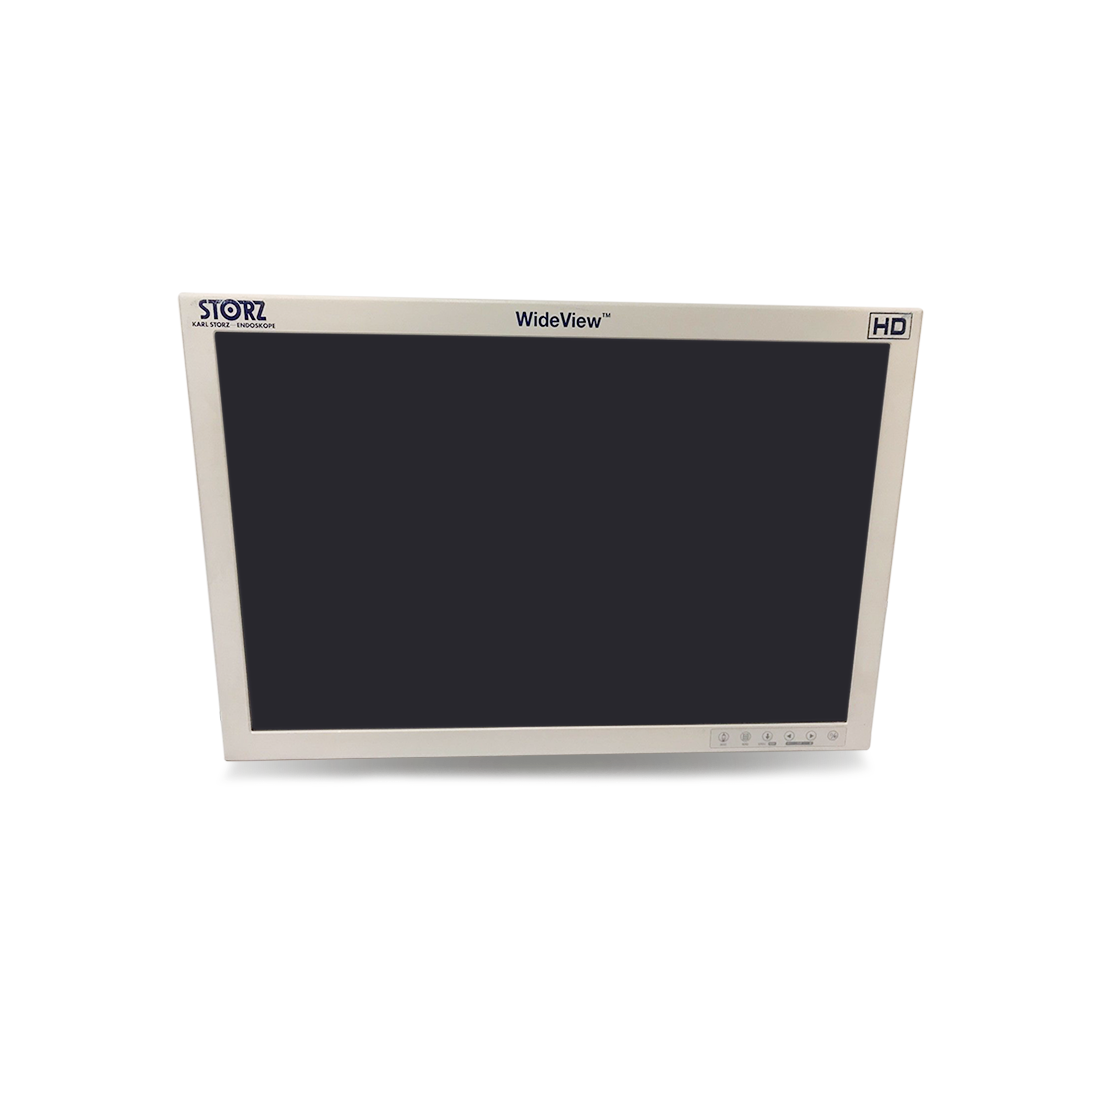 Storz NDS SC-WU23-A1515 Endoscopy Monitor